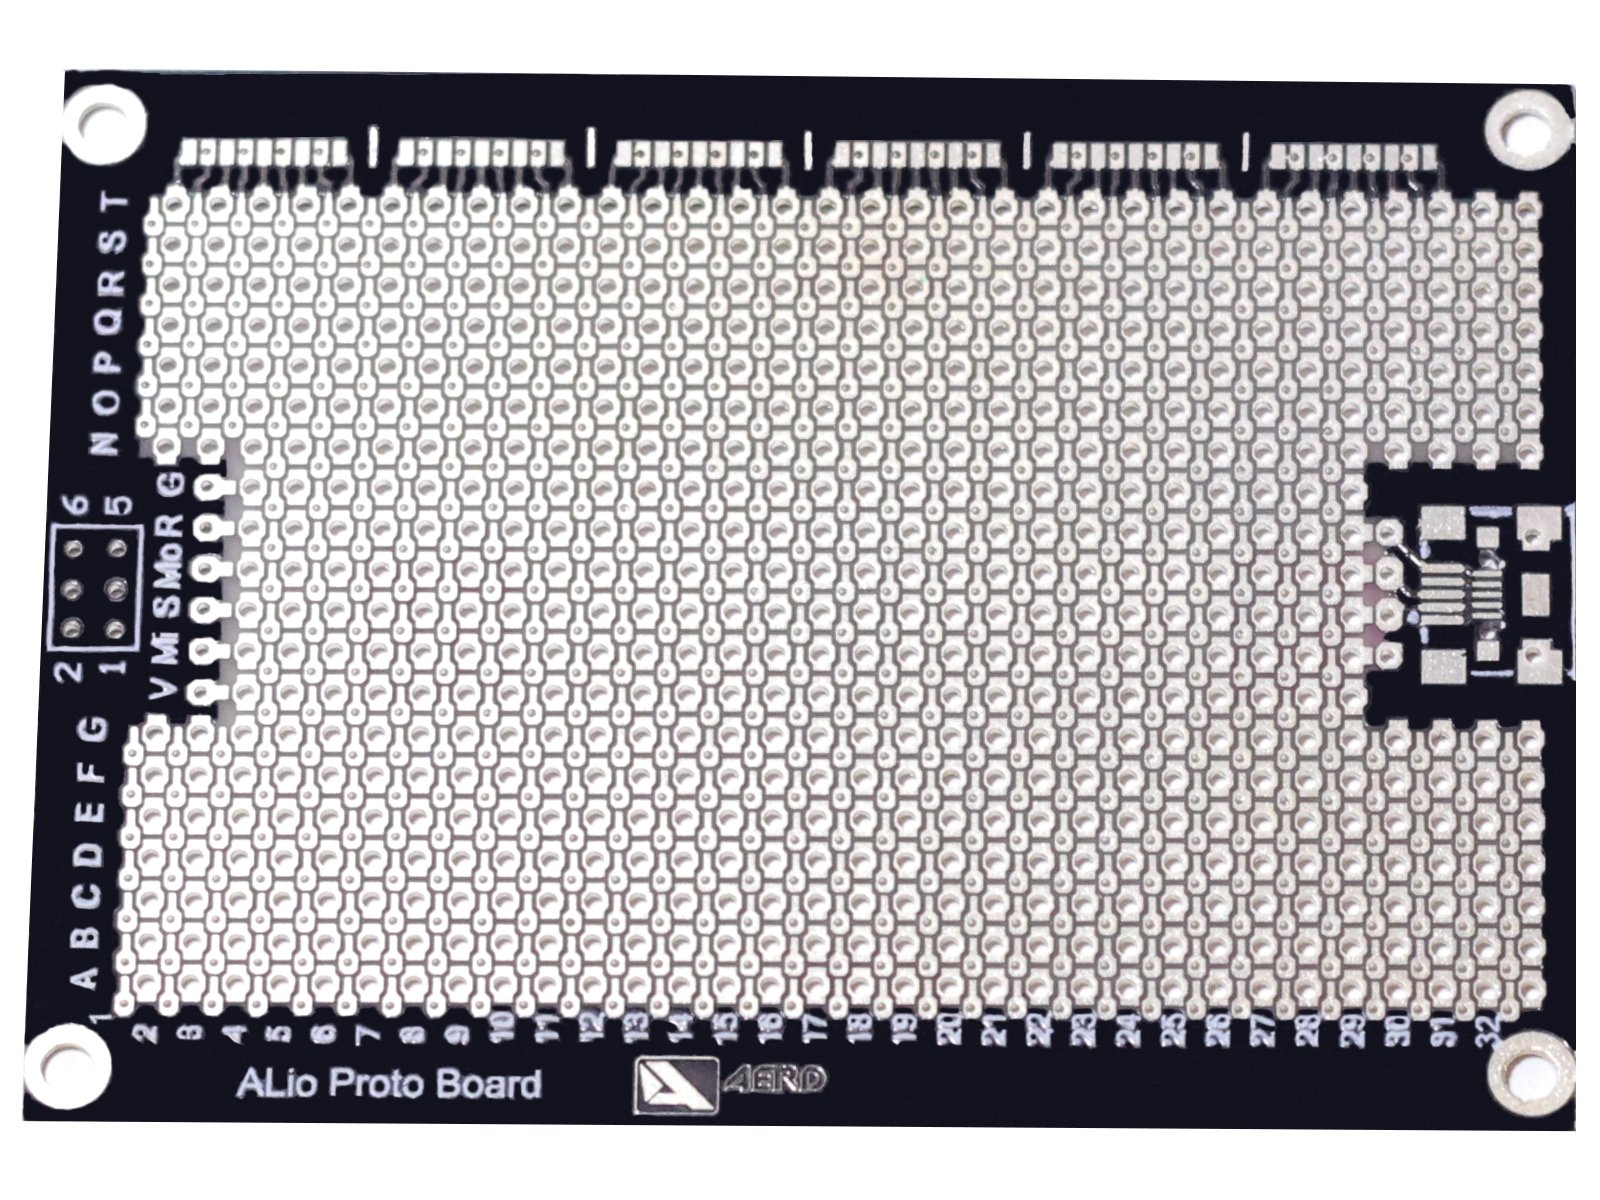 ALio embedded board, bottom view.